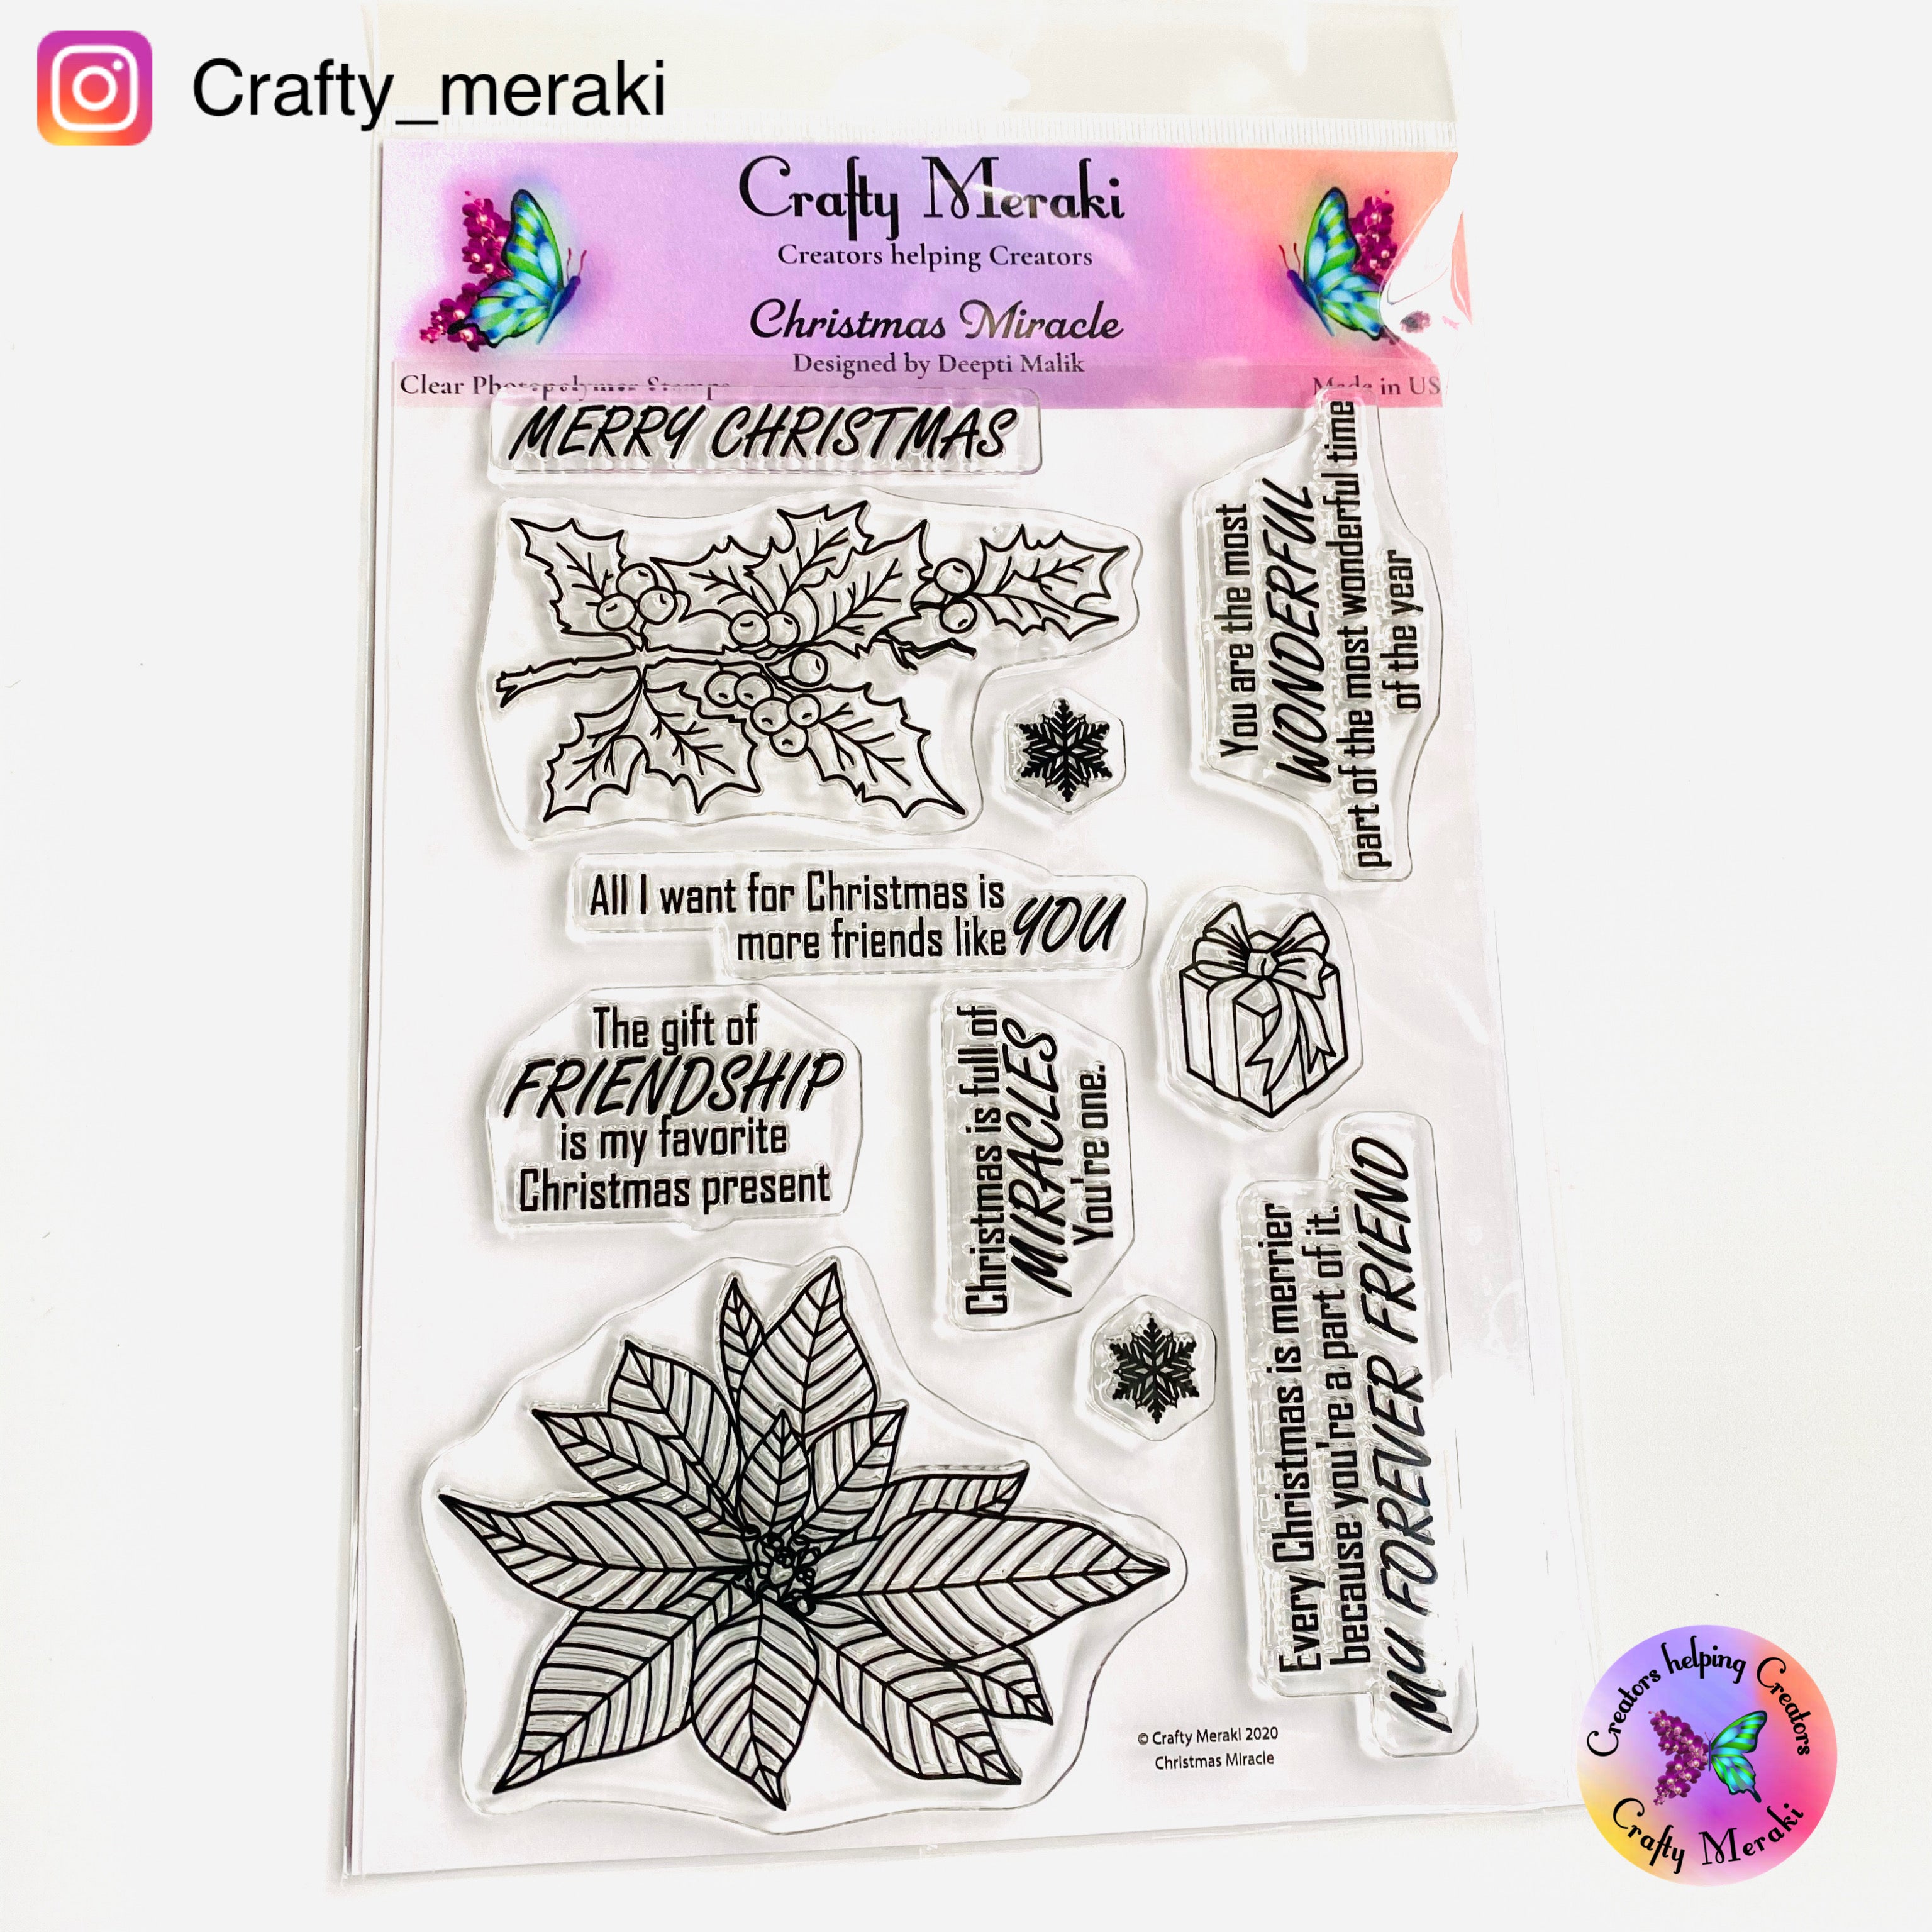 Crafty Meraki Christmas Miracle Clear stamp set - Crafty Meraki